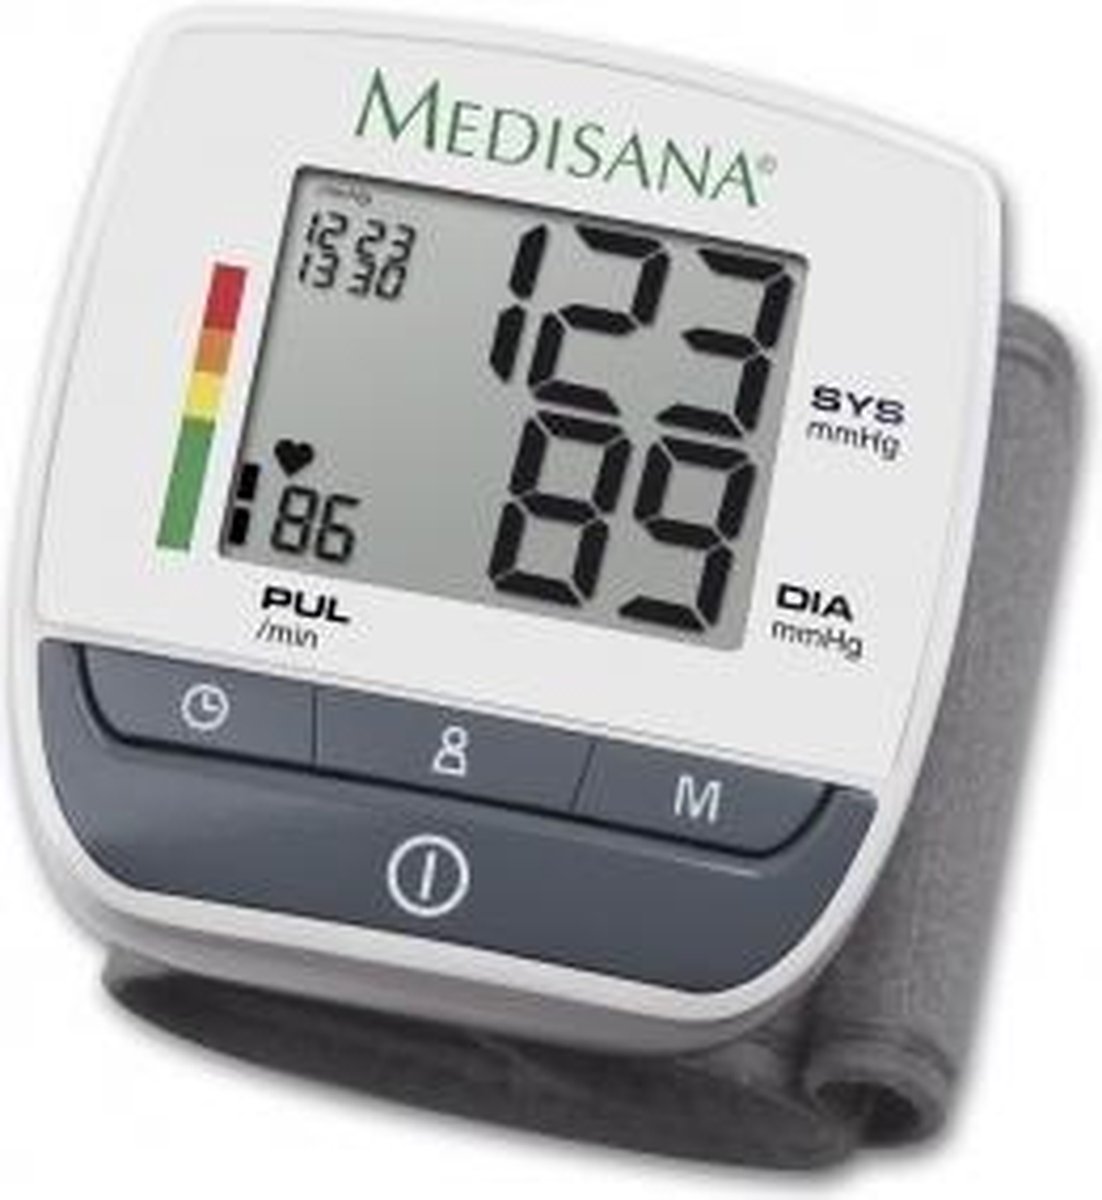 Medisana Polsbloeddrukmeter BW 310 | bol.com